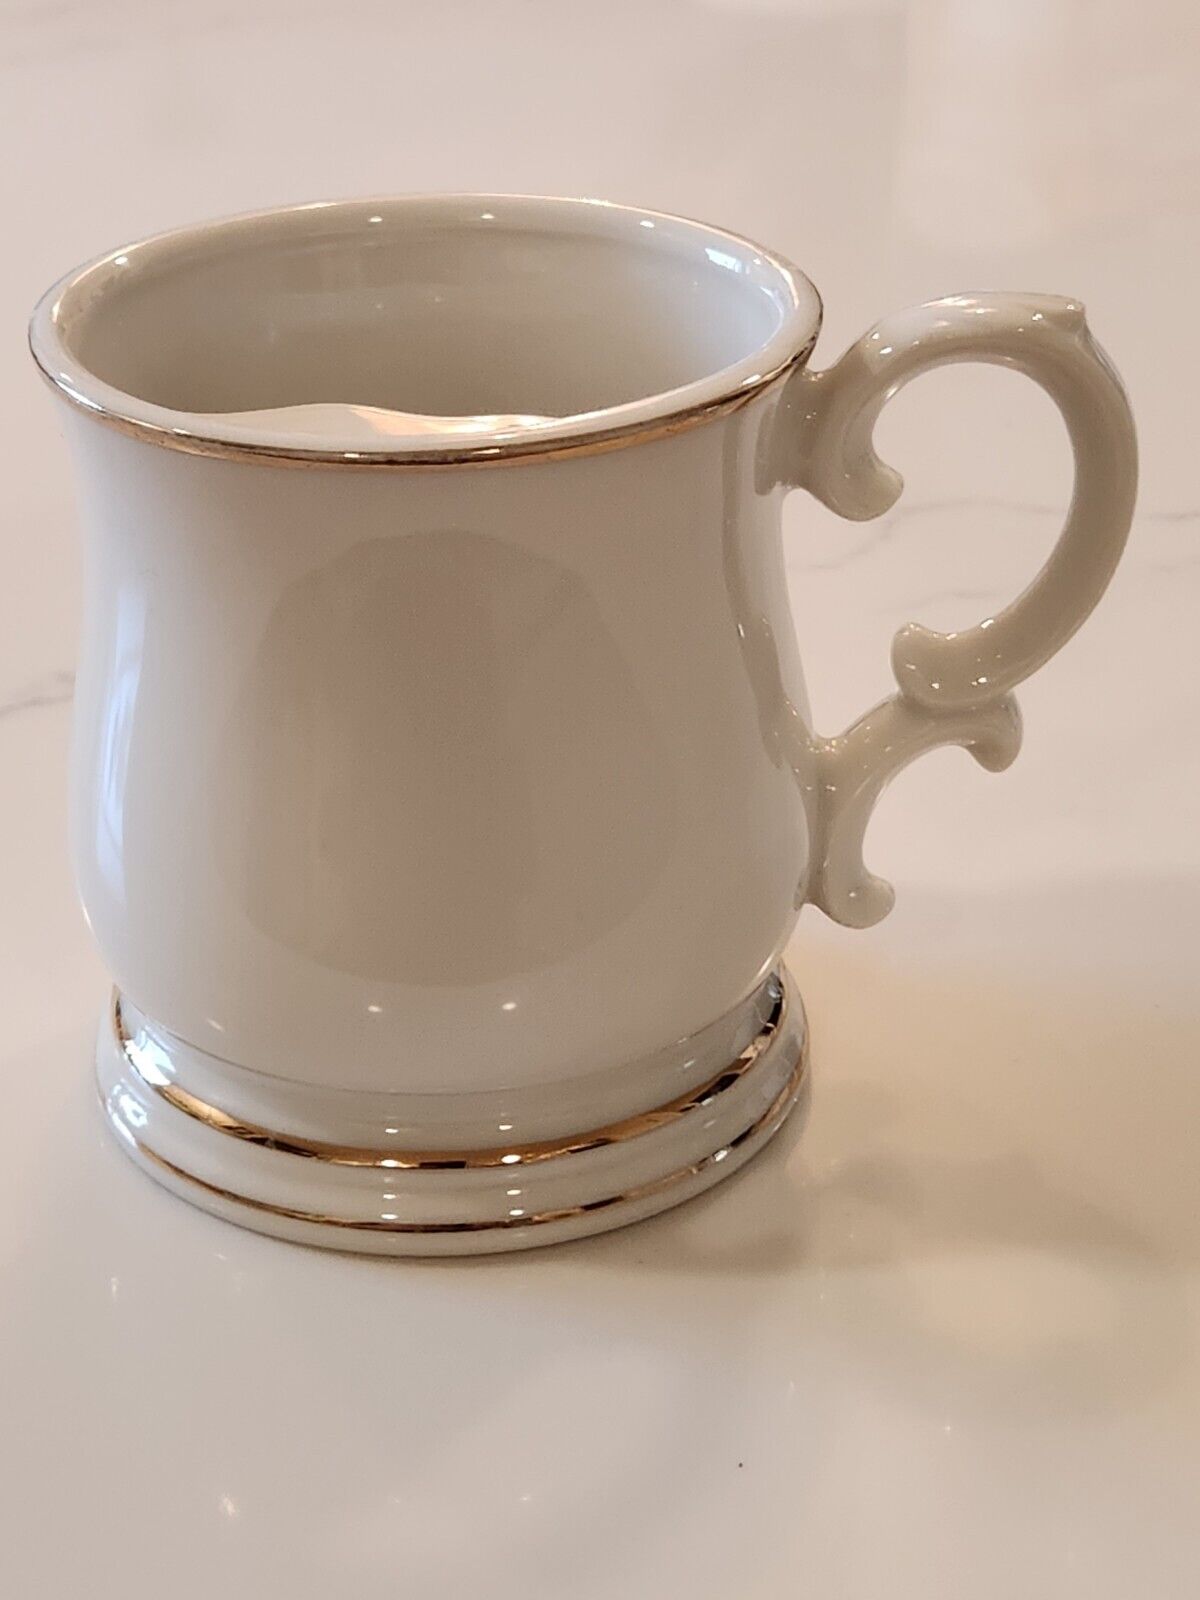 Vintsge Porcelain White Mustache Mug With Gold Trim From Japan 